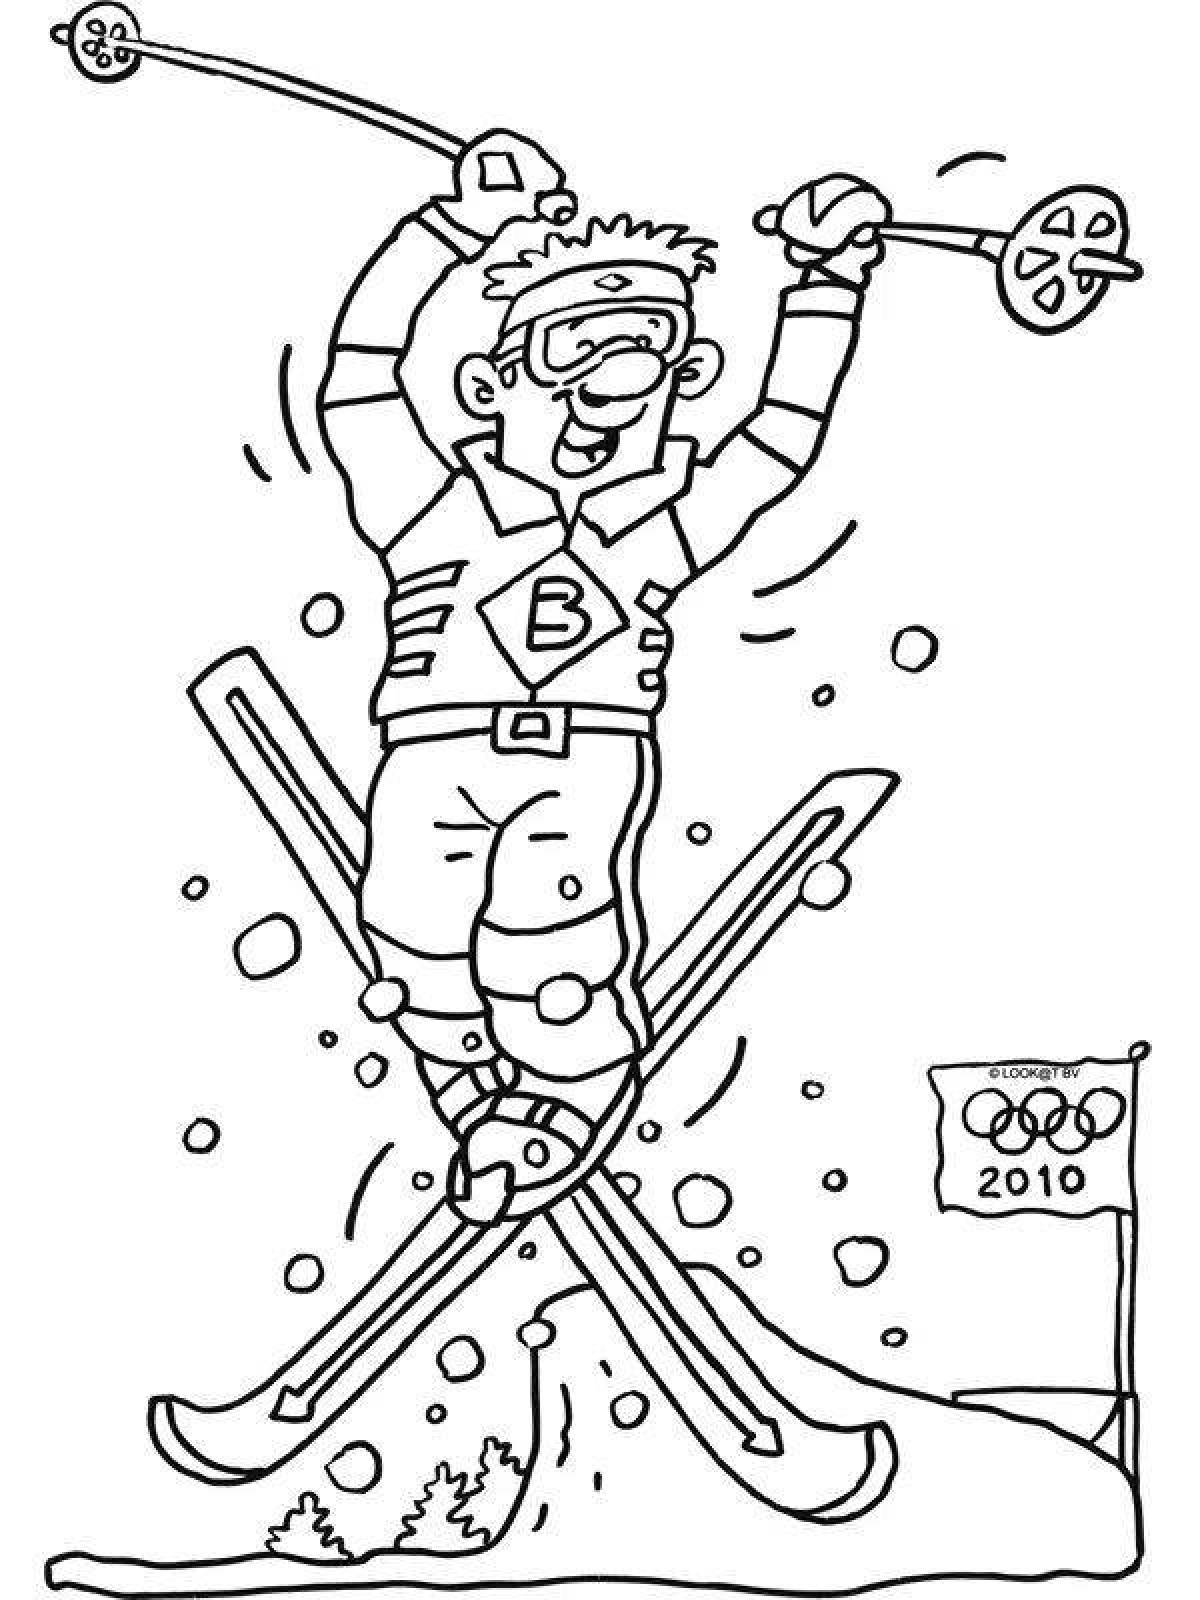 Funny biathlon coloring book